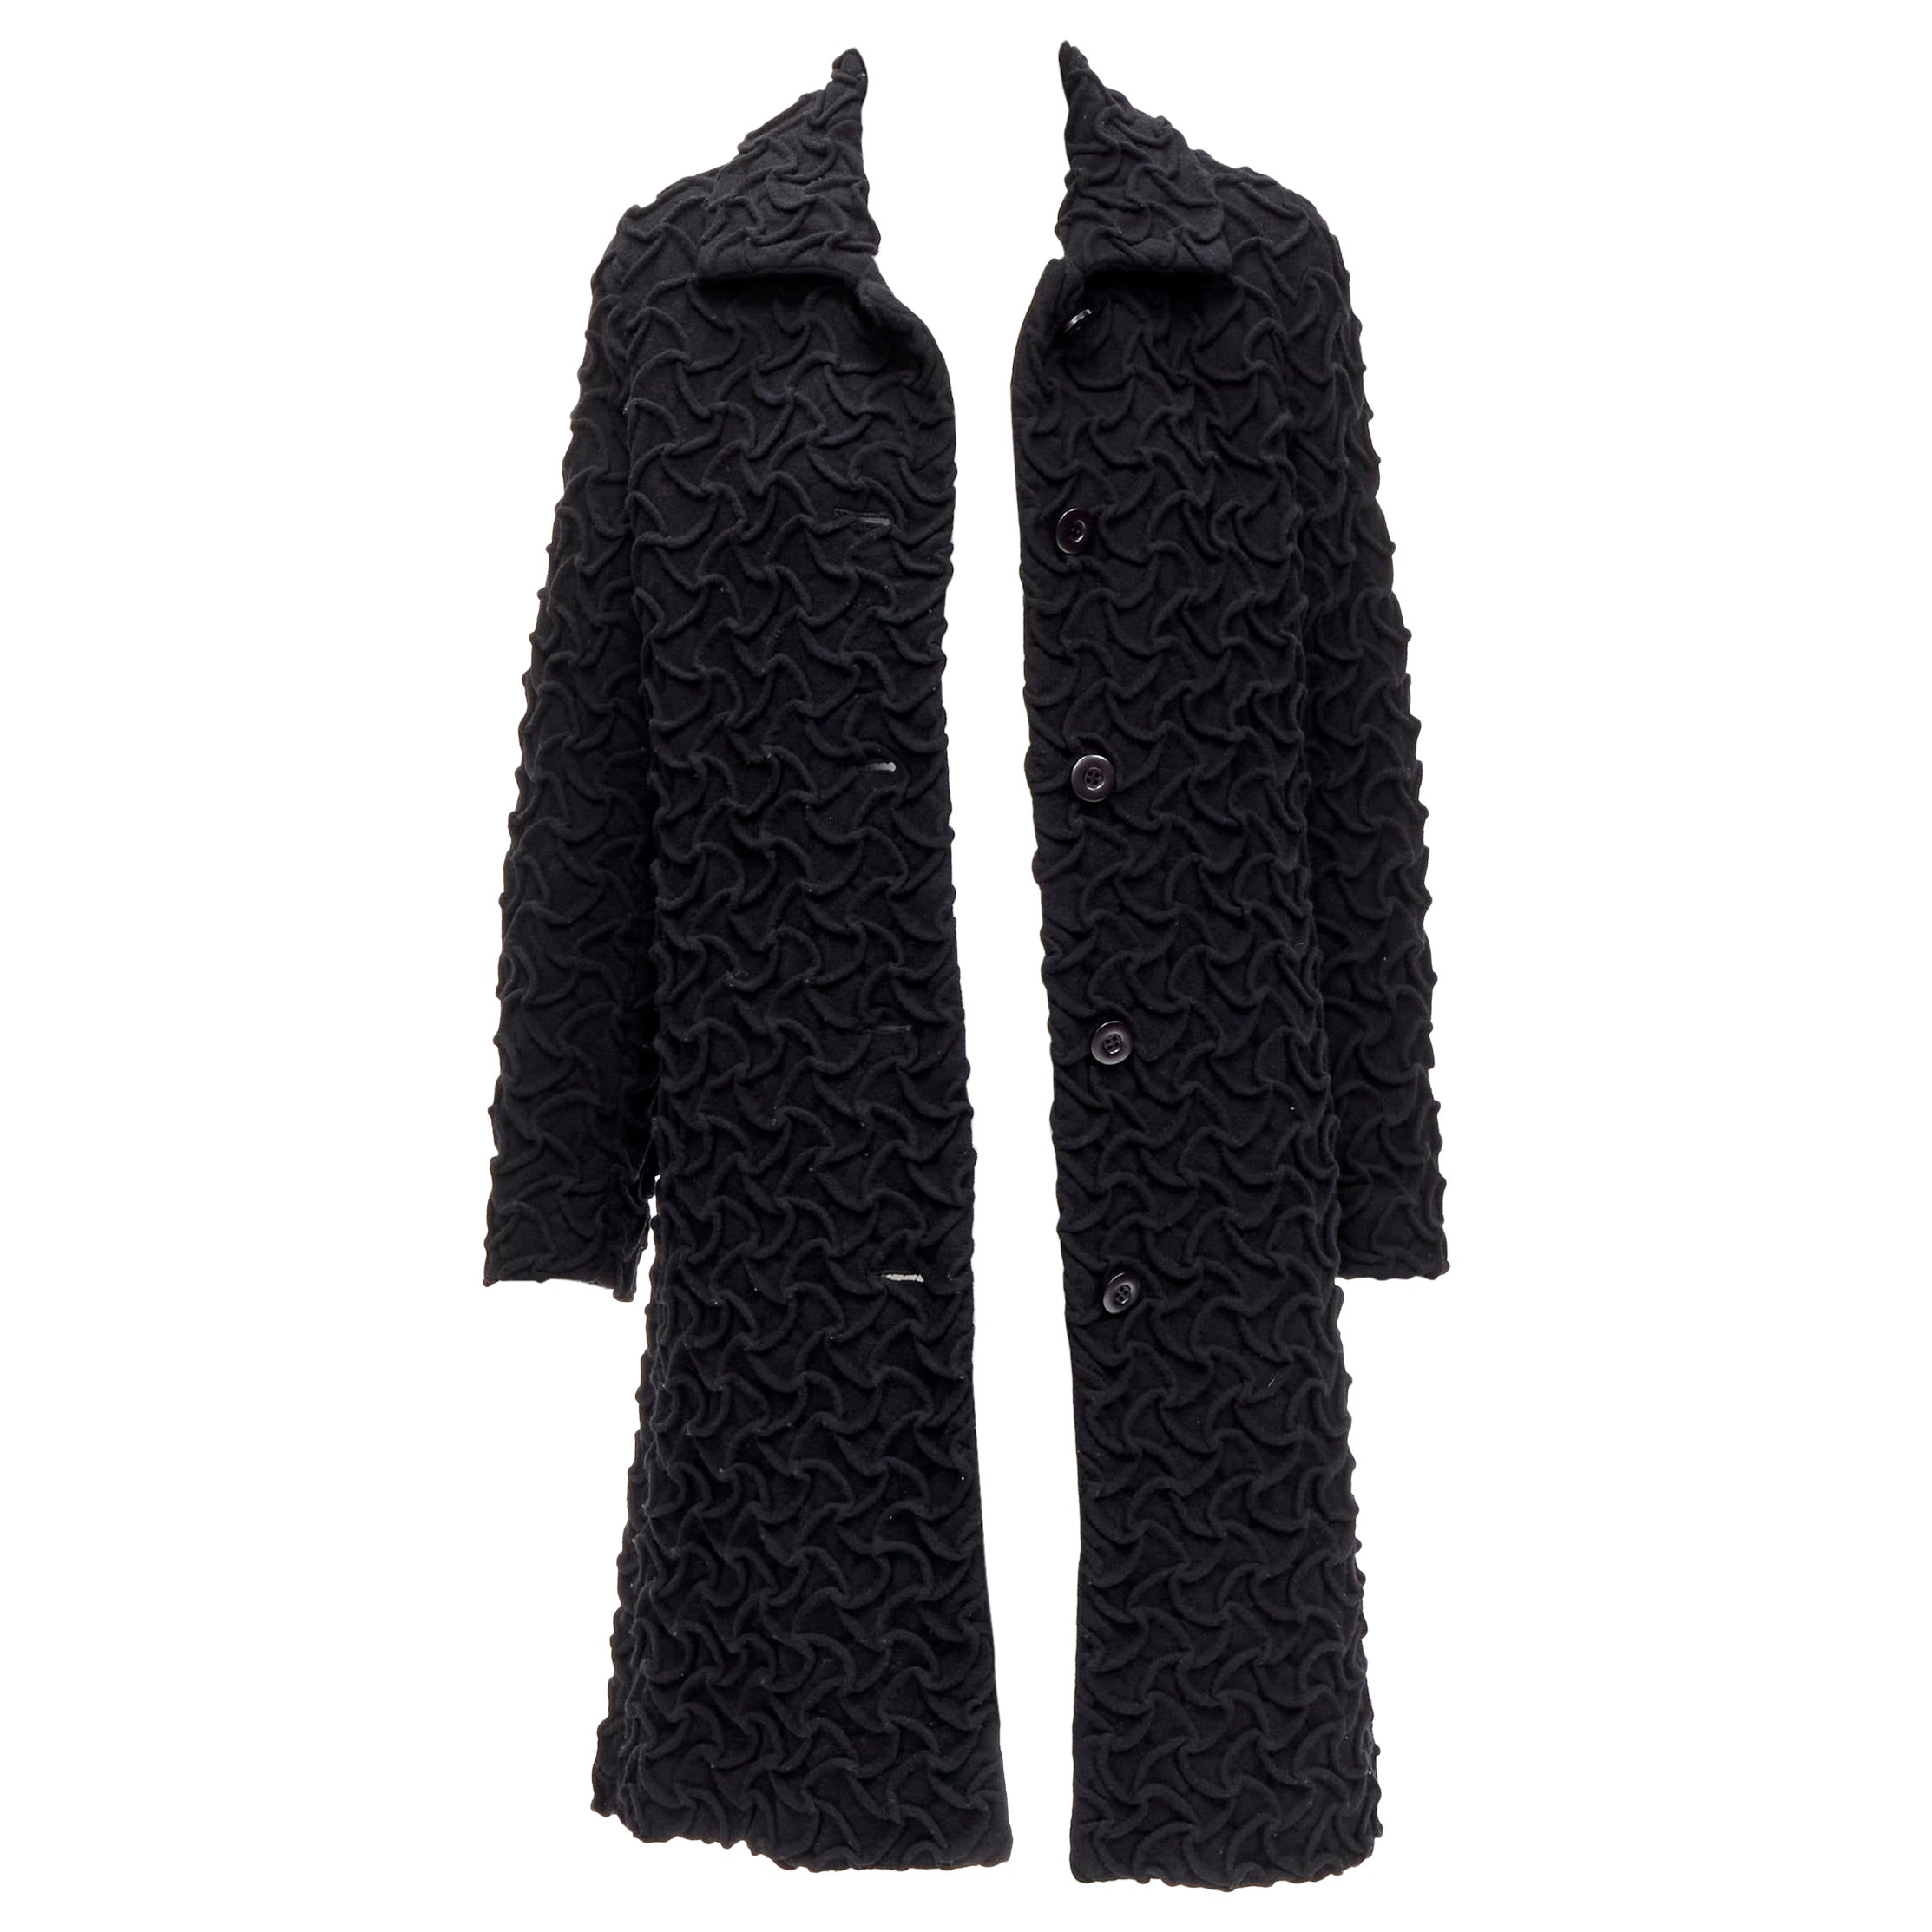 ISSEY MIYAKE 100% wool black textured single breasted long jacket coat JP2 M For Sale